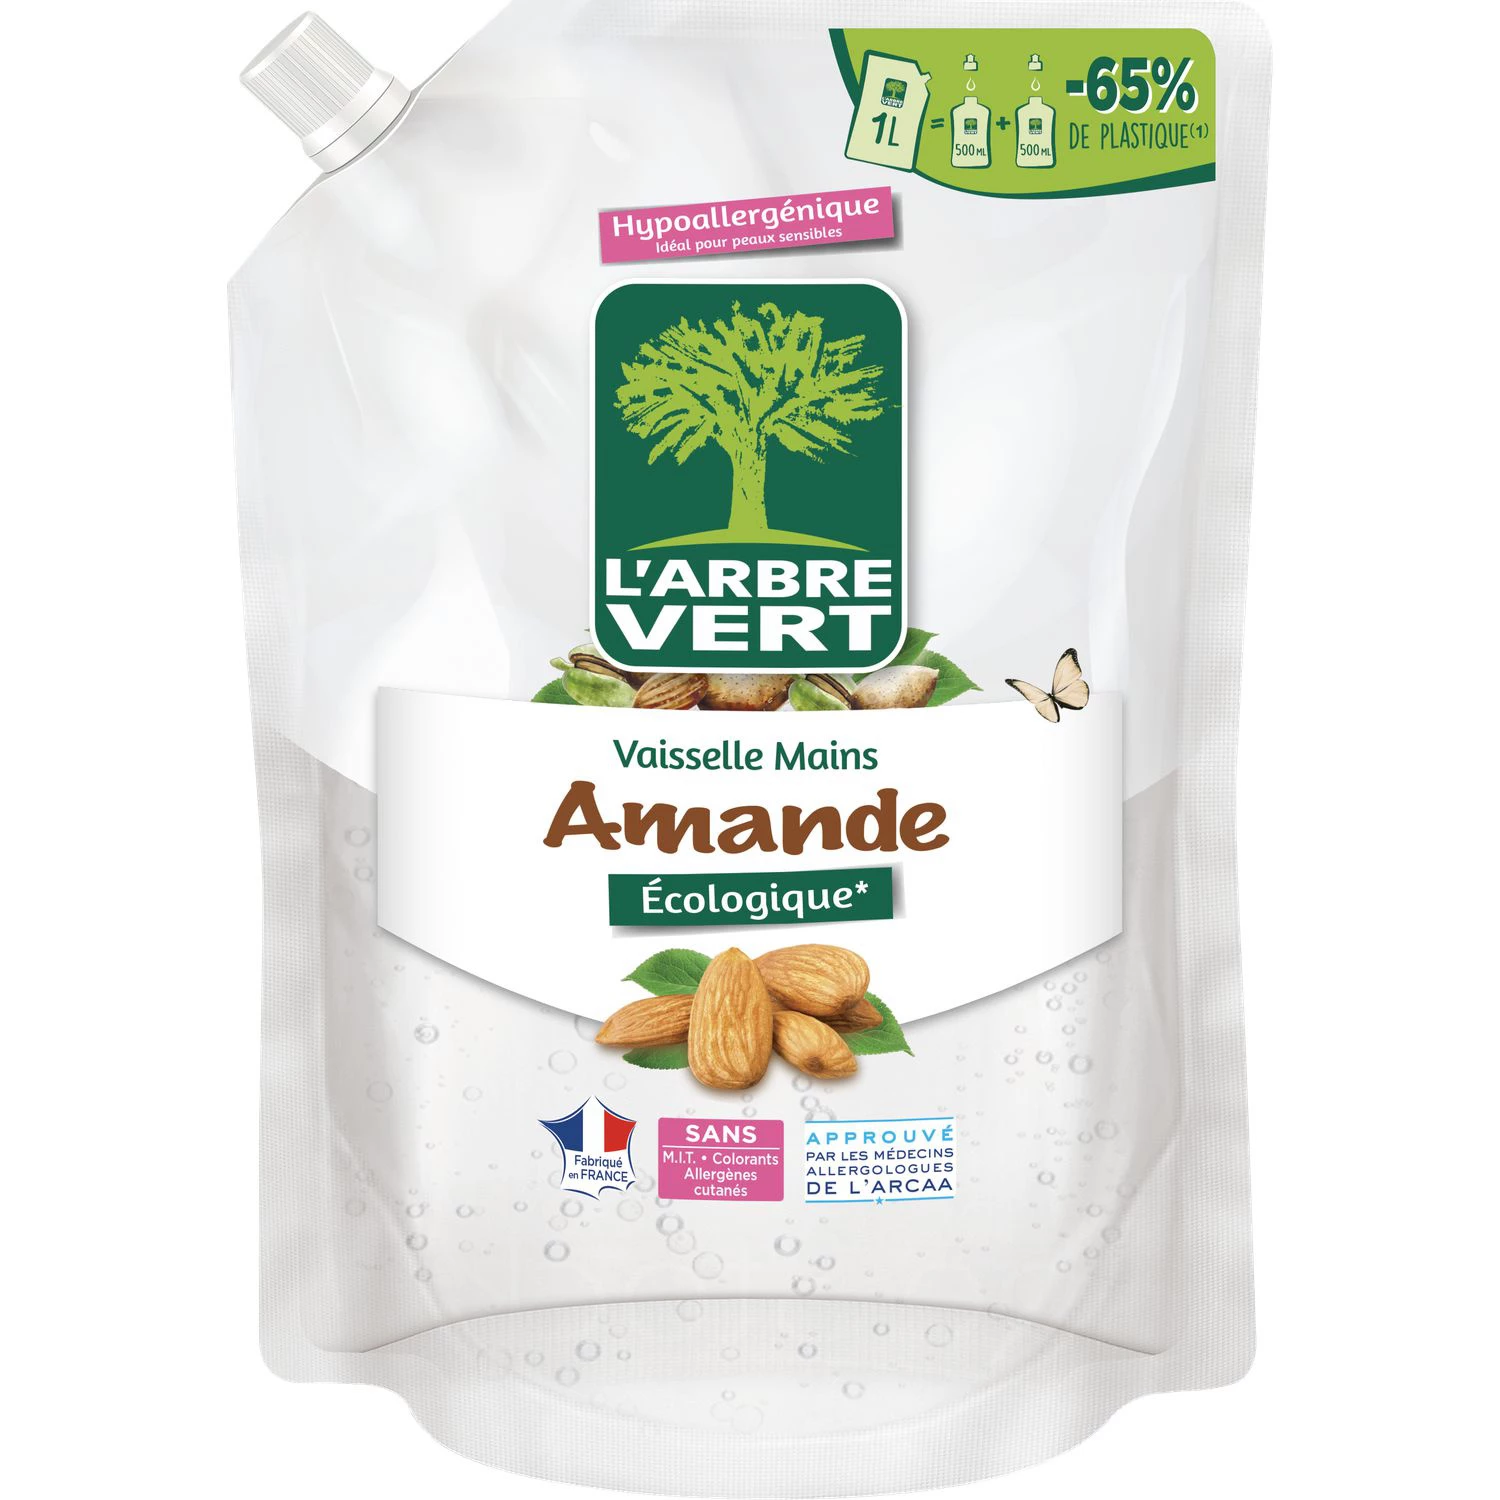 Almond ecological dishwashing liquid refill 1L - L'ARBRE VERTE